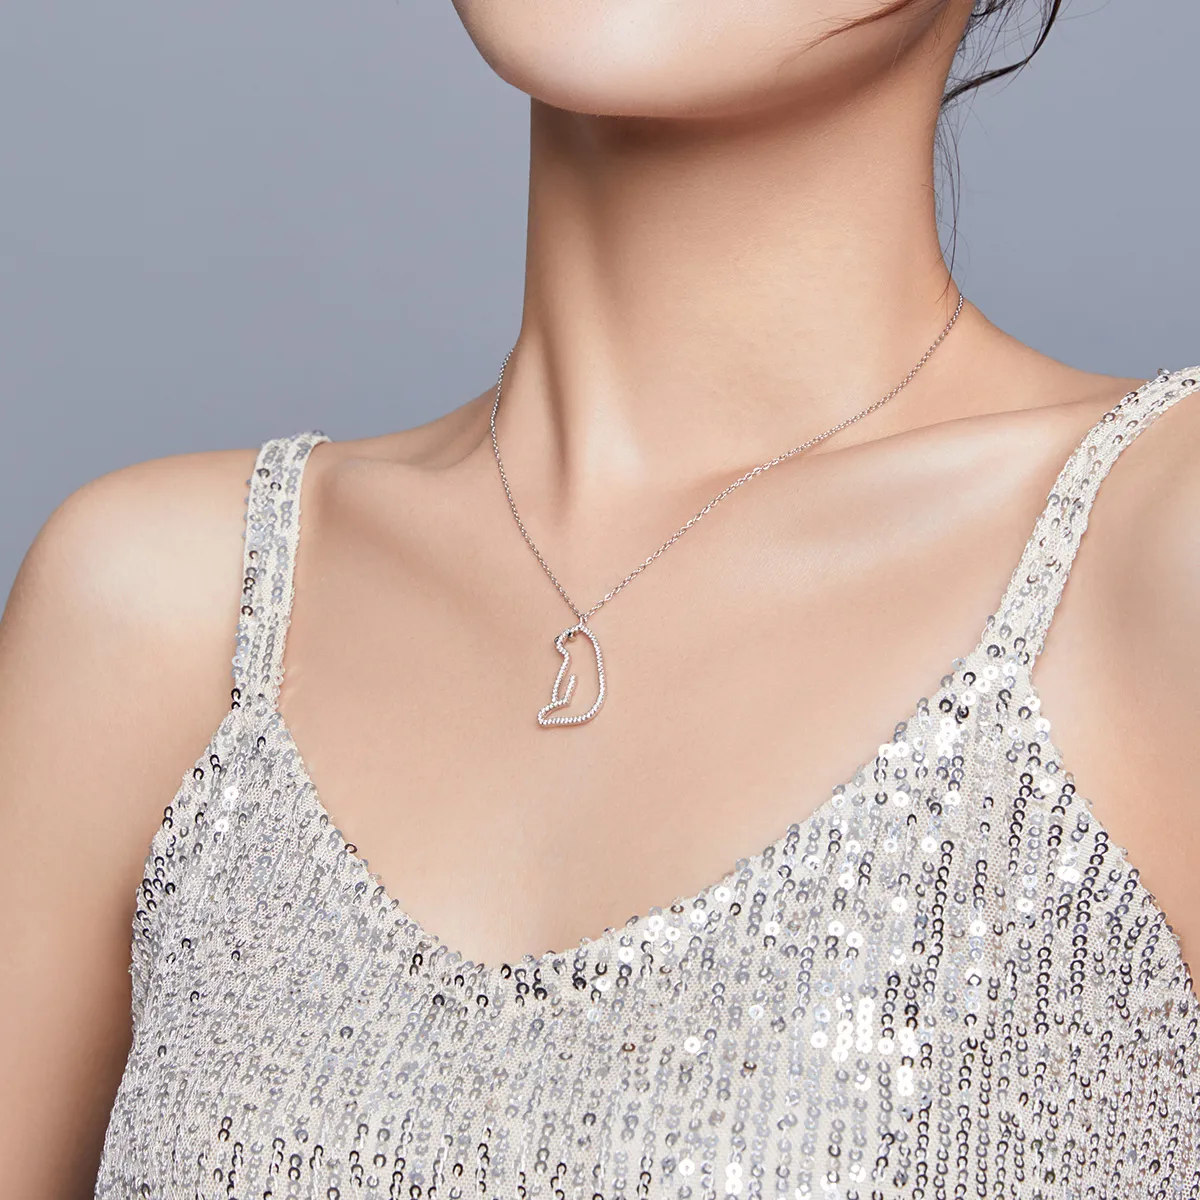 Pandora Style Polar Bear Necklace - BSN195